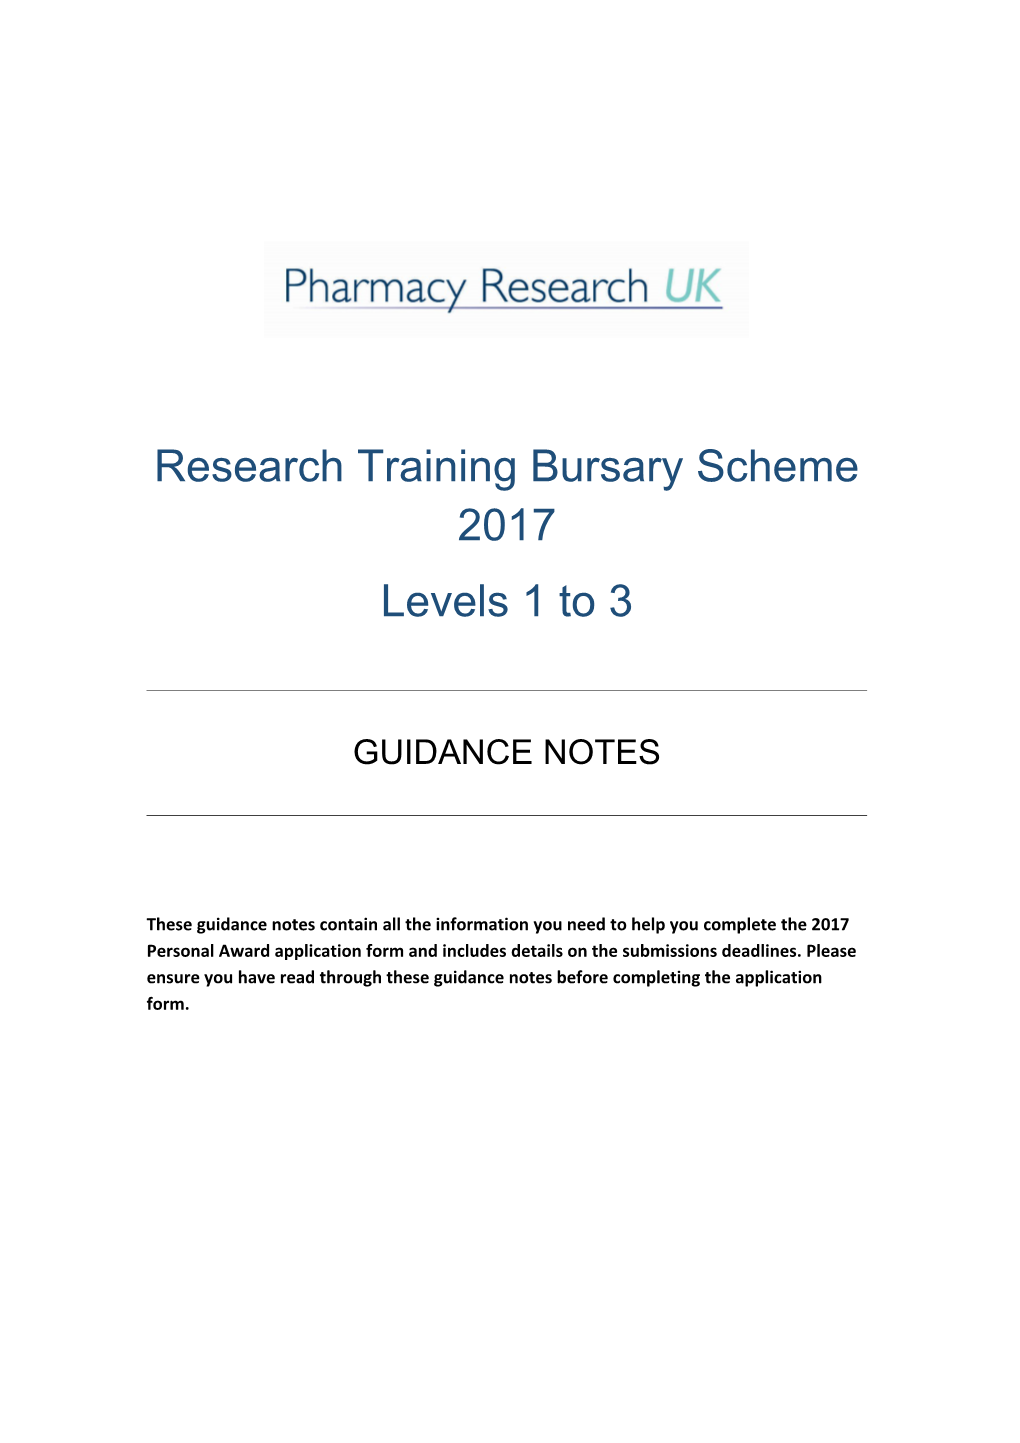 Research Training Bursary Scheme 2017